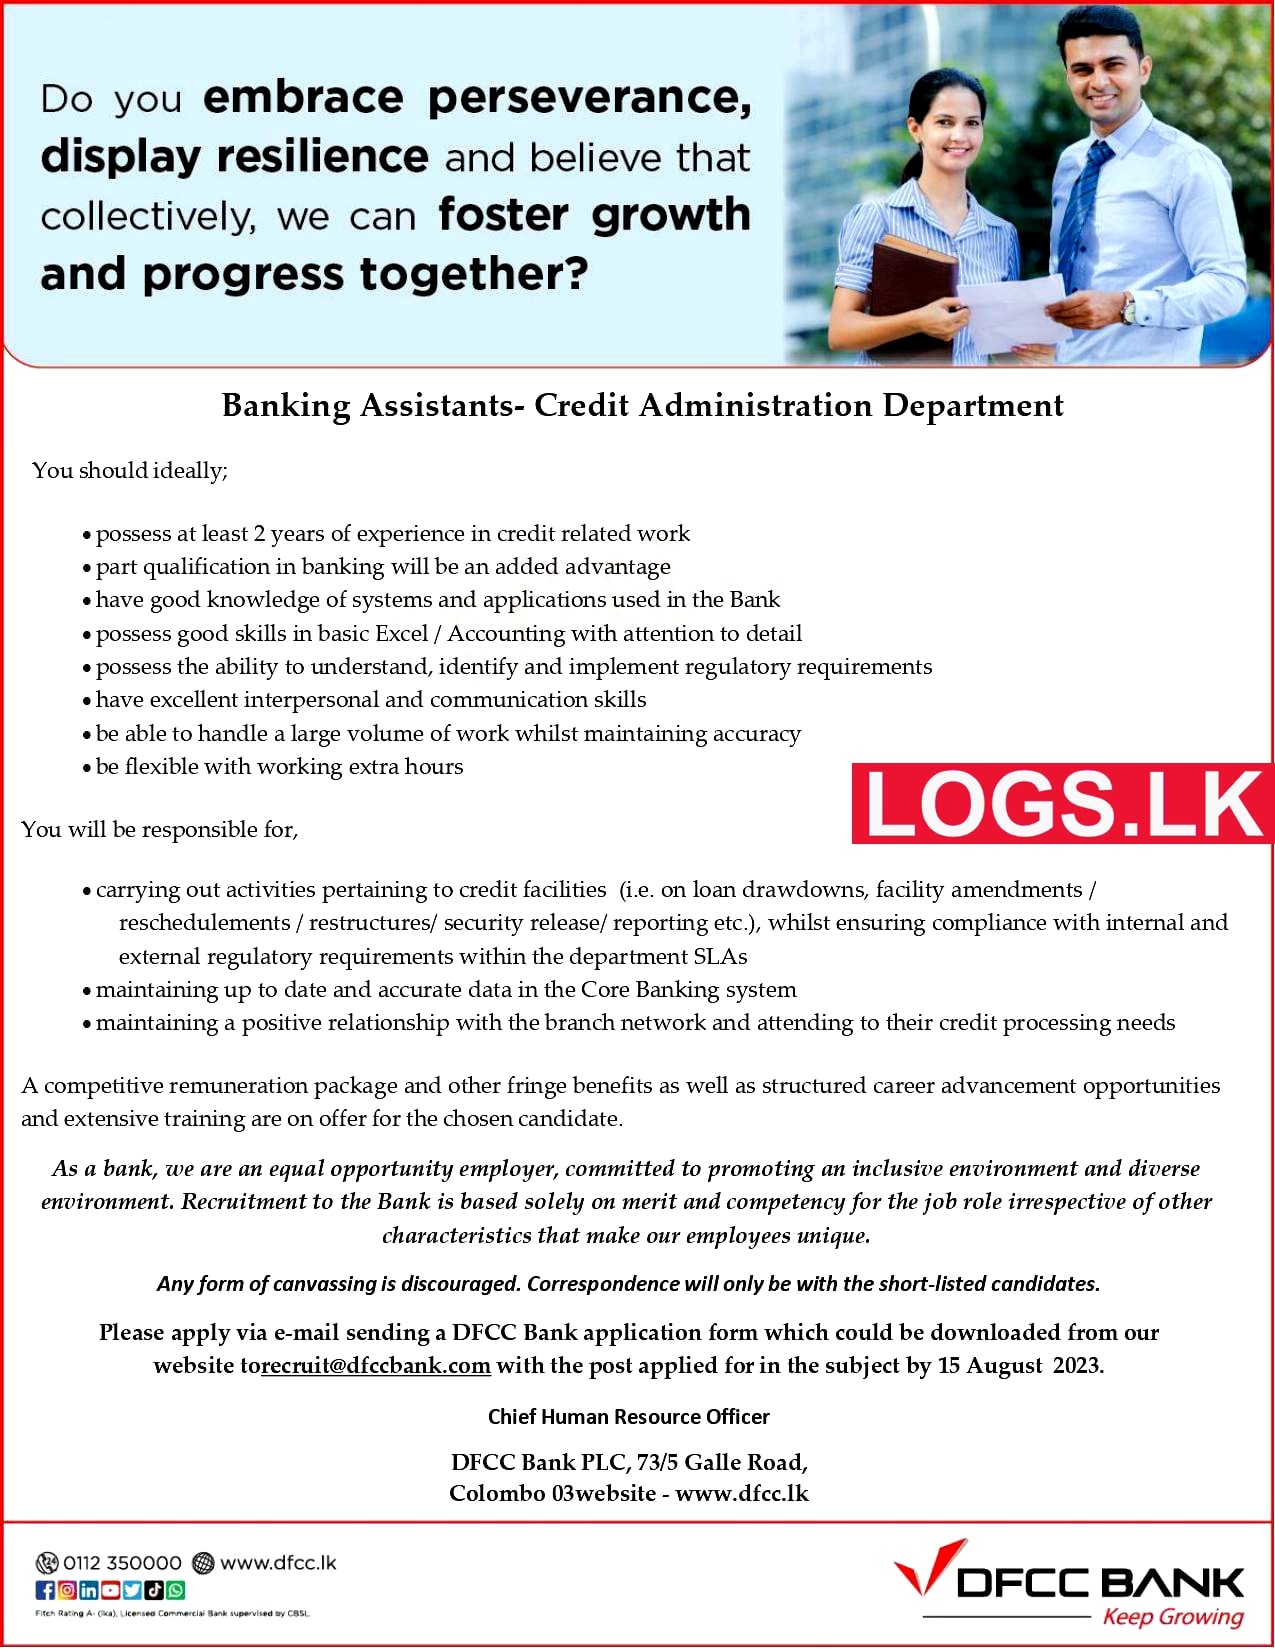 Banking Assistants (Credit Administration Department) - DFCC Bank Vacancies 2023 Application Form